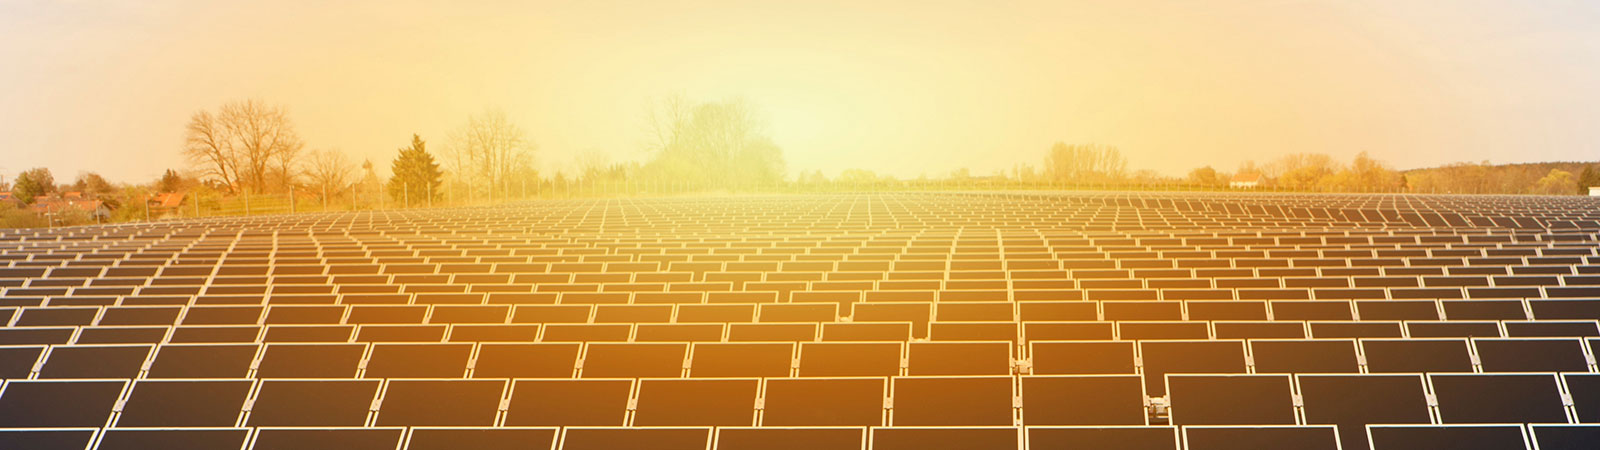 campo fotovoltaico al amanecer